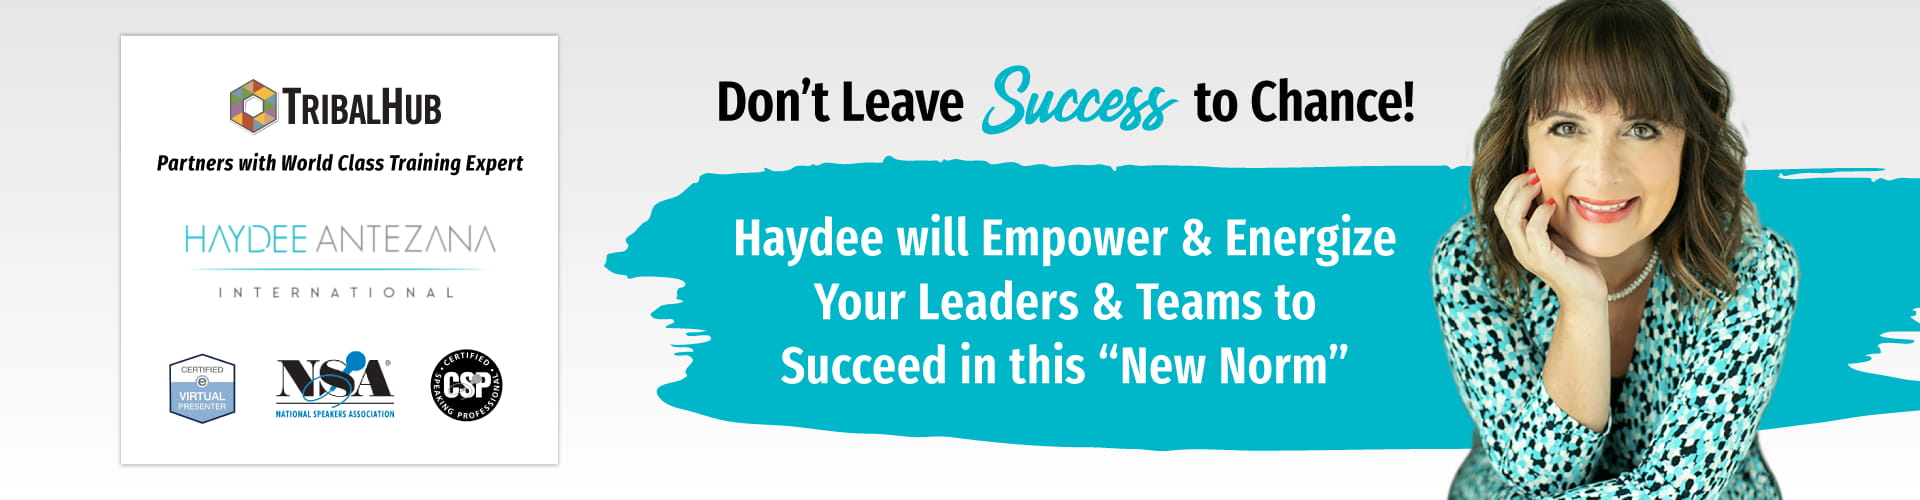 Don't leave success to chance - Haydee Antezana training expert